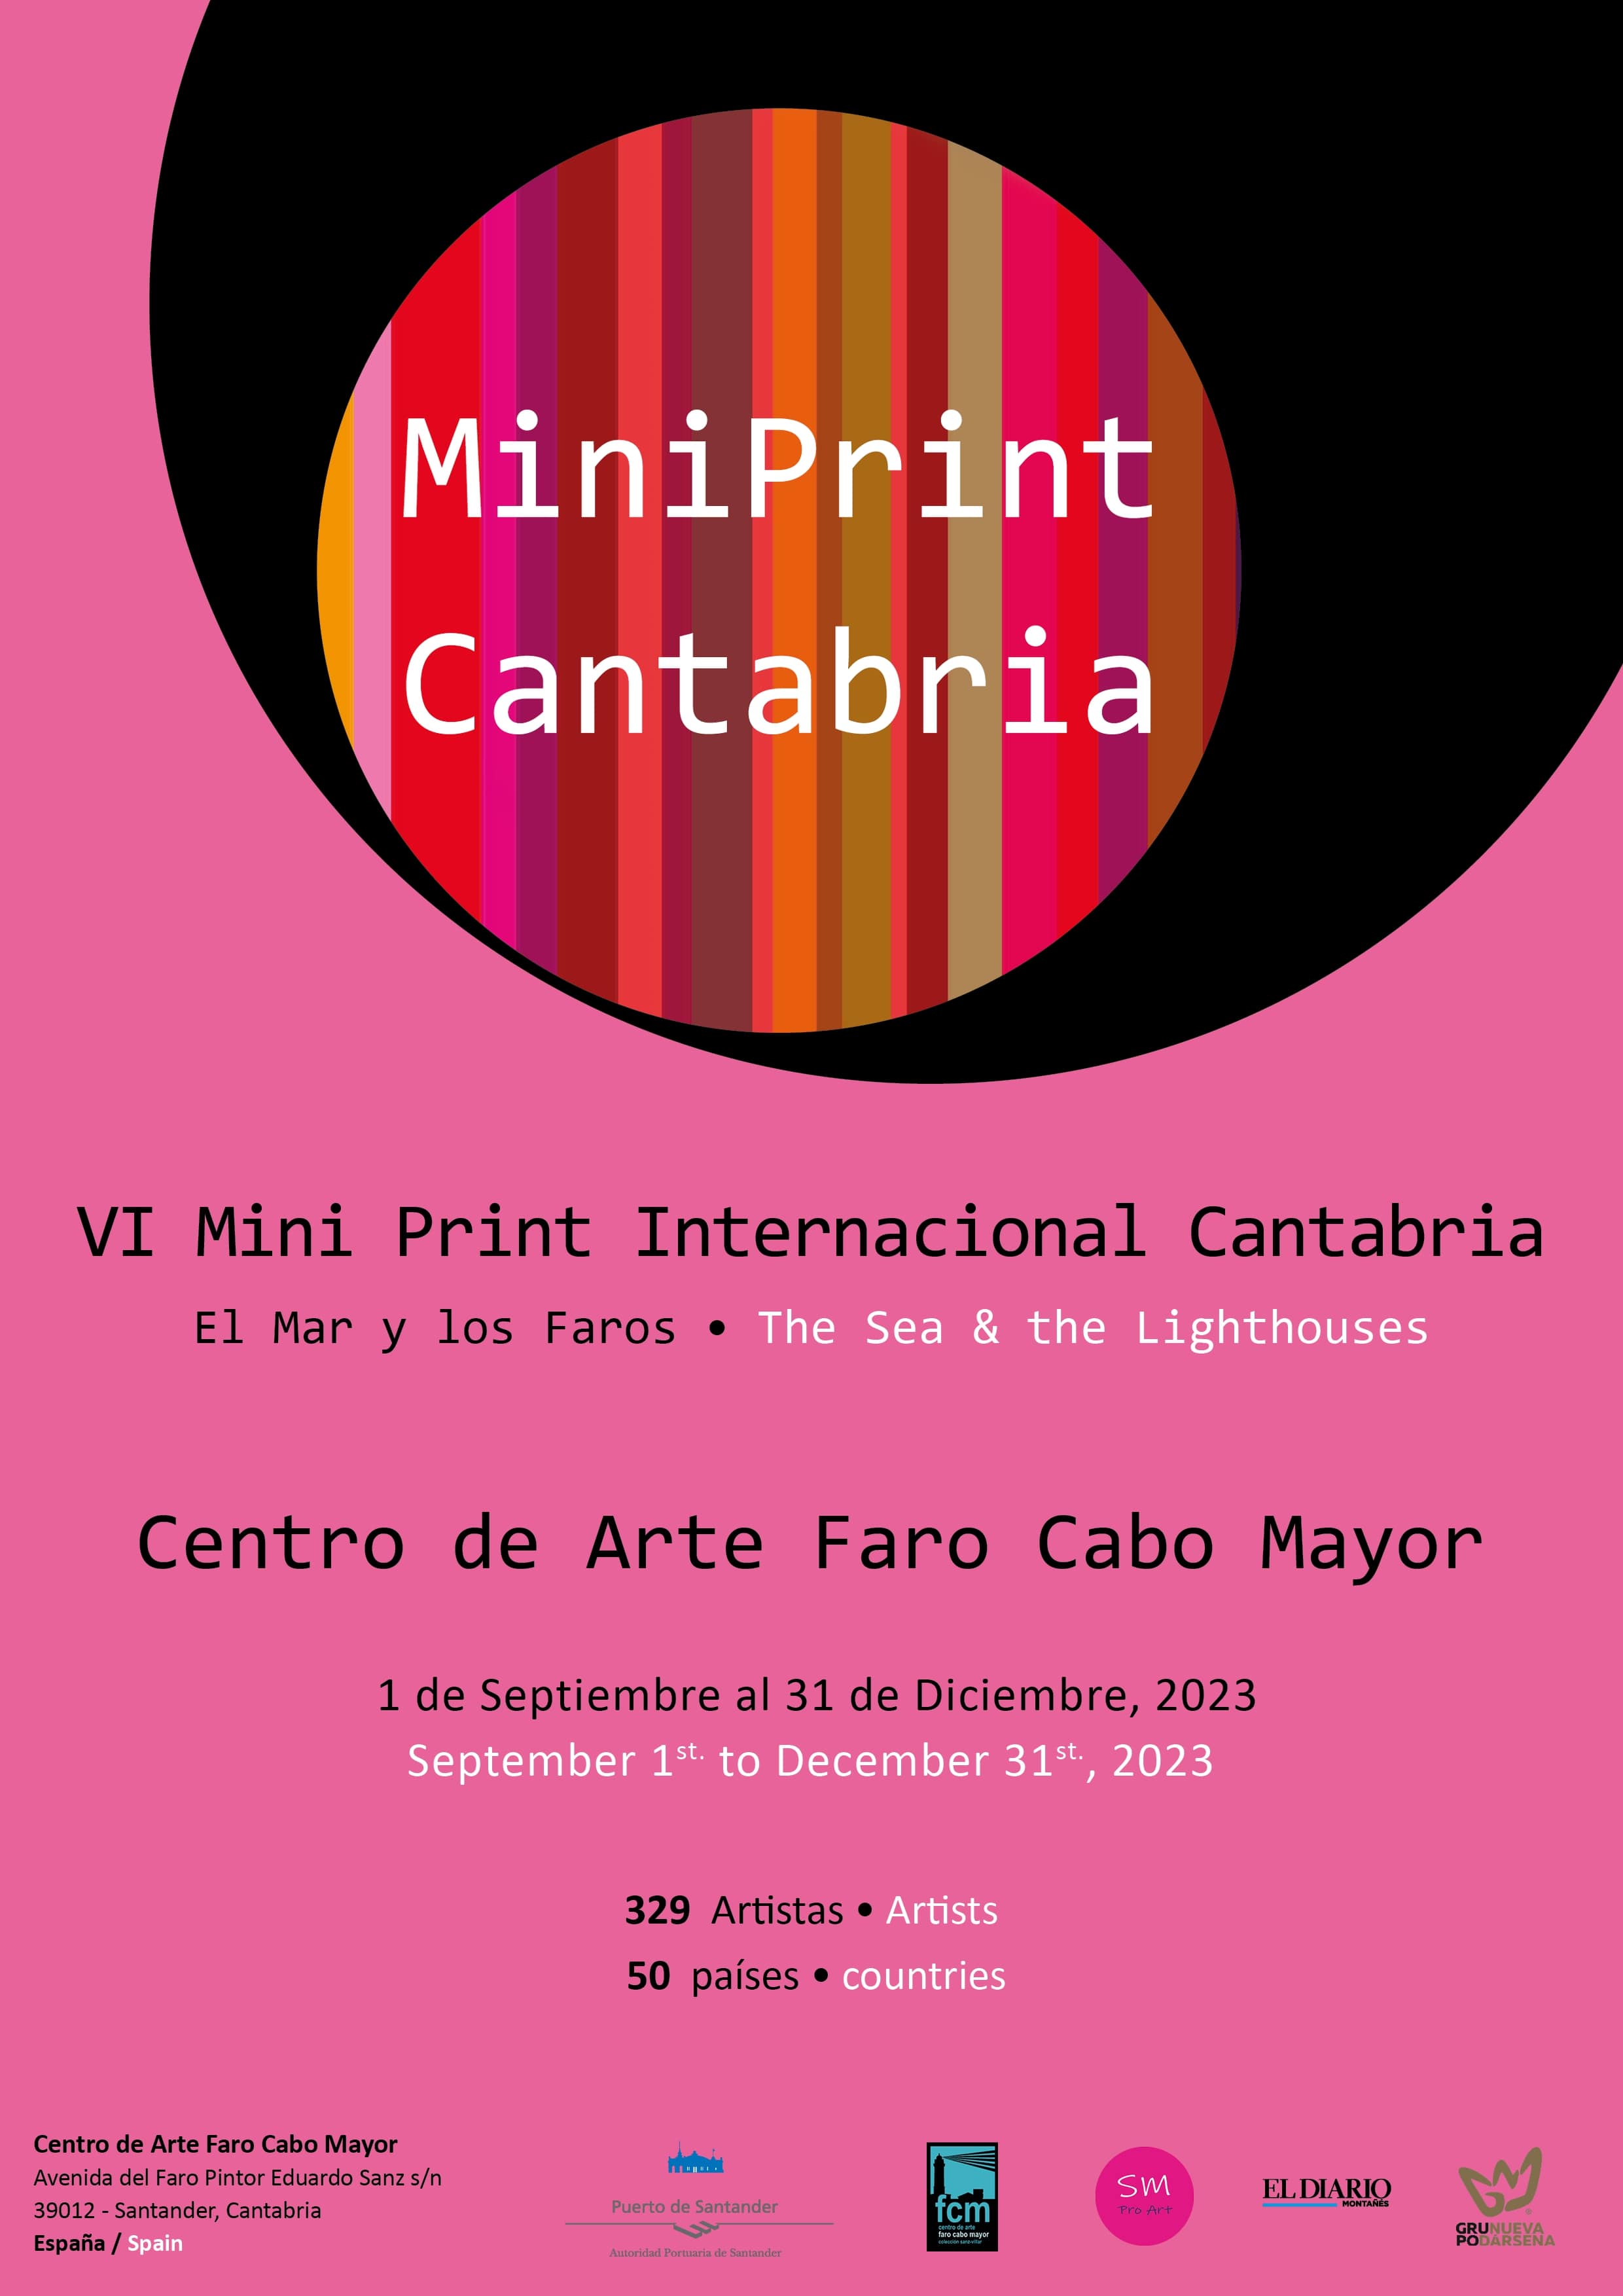 Cantabria invitation VI Mini Print.jpg - 221,3 KB